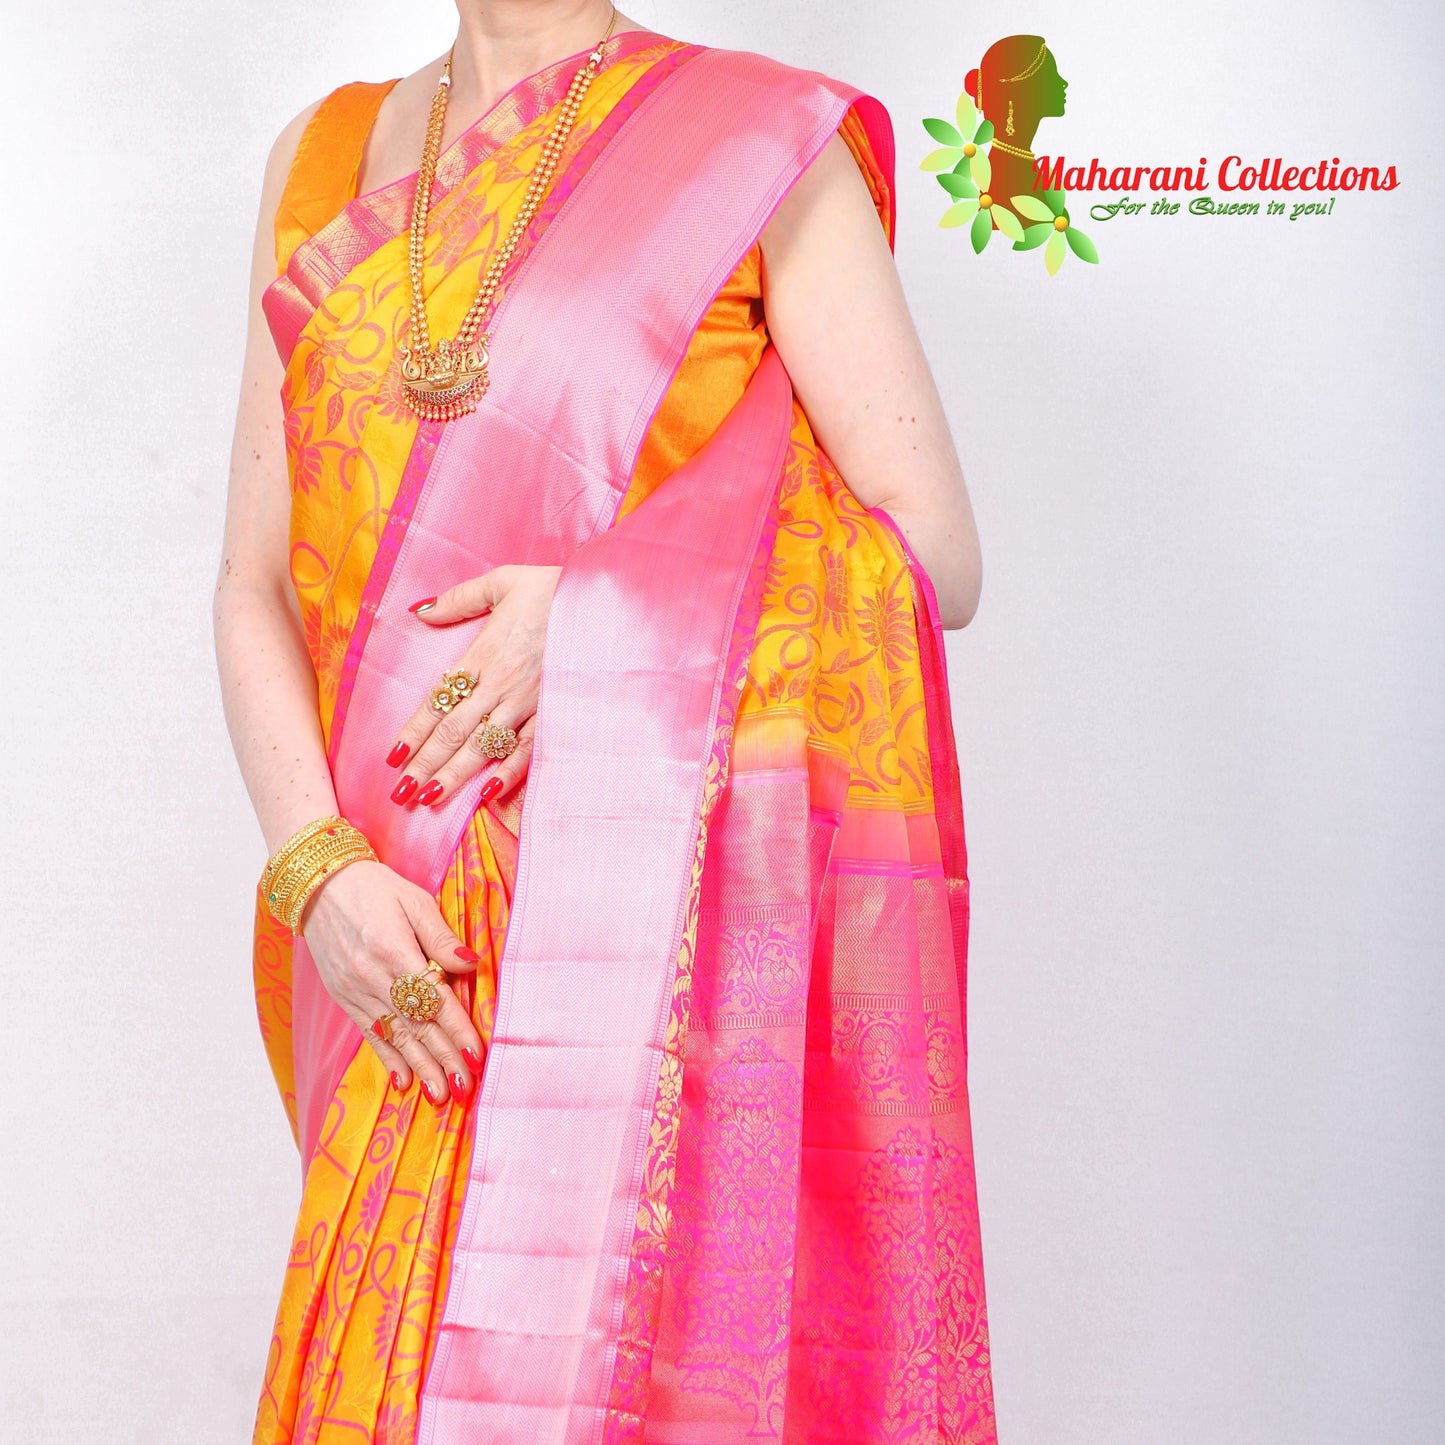 Maharani's Pure Handloom Kanjivaram Silk Saree - Auspicious Yellow with Pink Border and Pallu